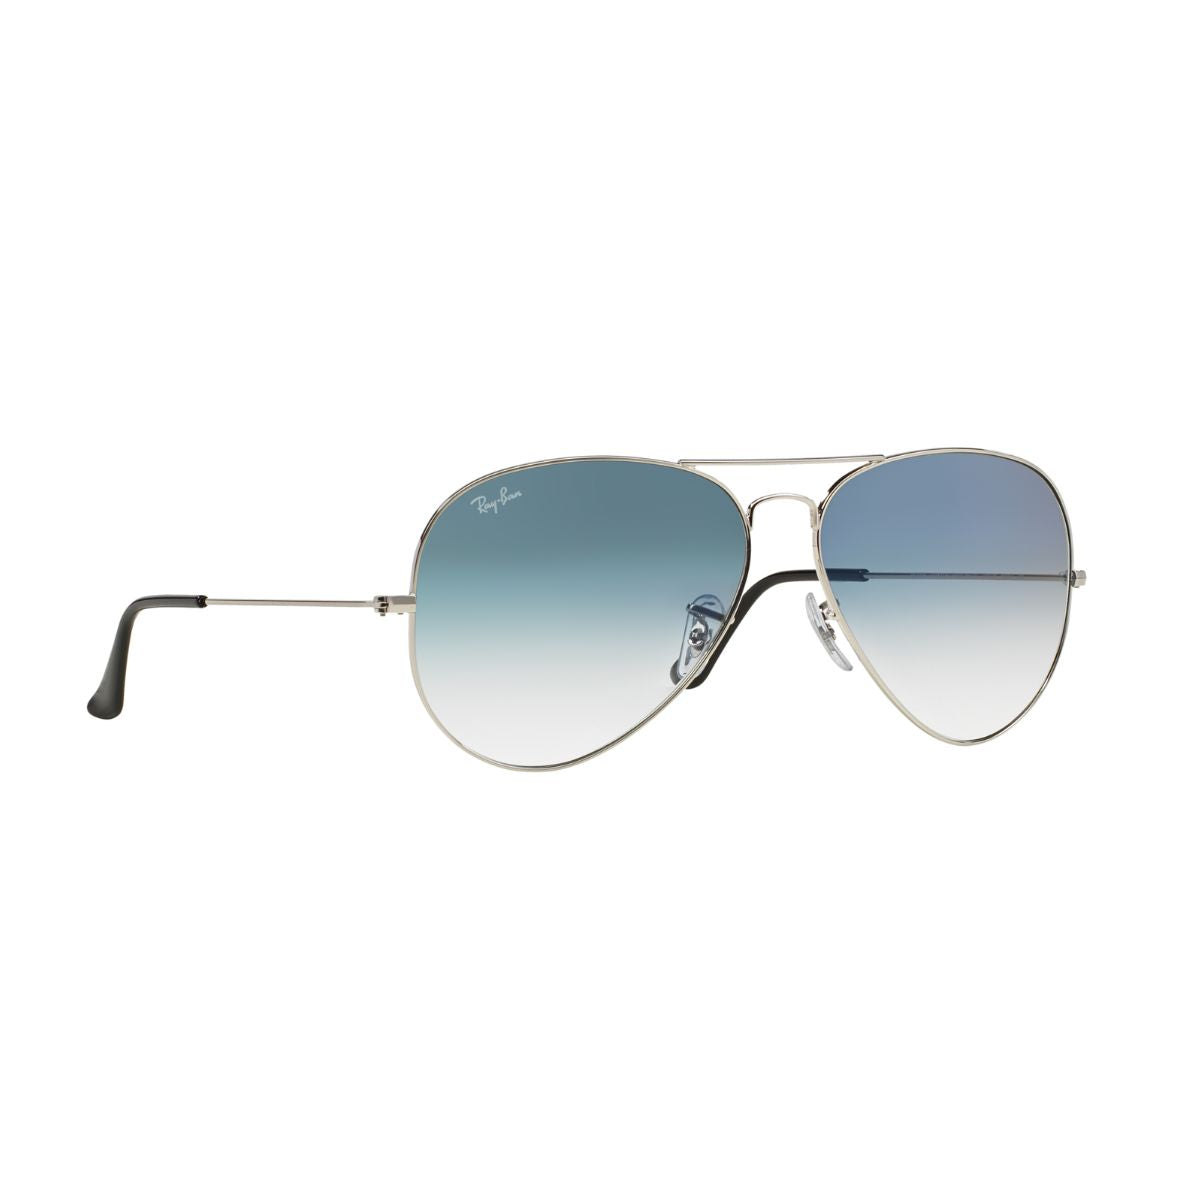 "Best Ray Ban 3025 003/3F Men's Aviator Eyewear Sunglasses Online At Optorium"